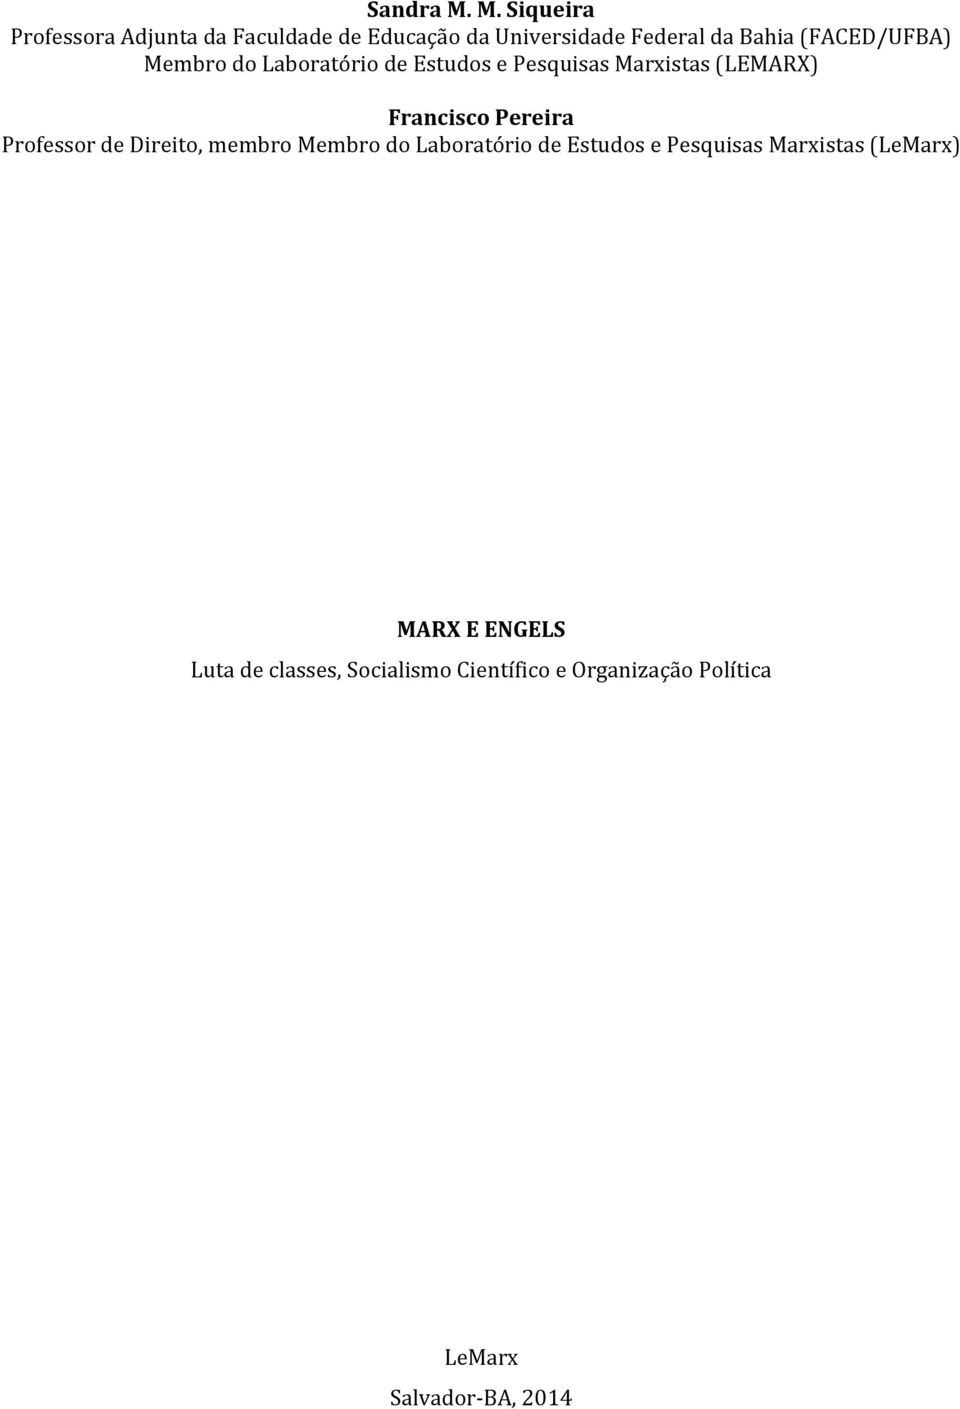 (FACED/UFBA) Membro do Laboratório de Estudos e Pesquisas Marxistas (LEMARX) Francisco Pereira